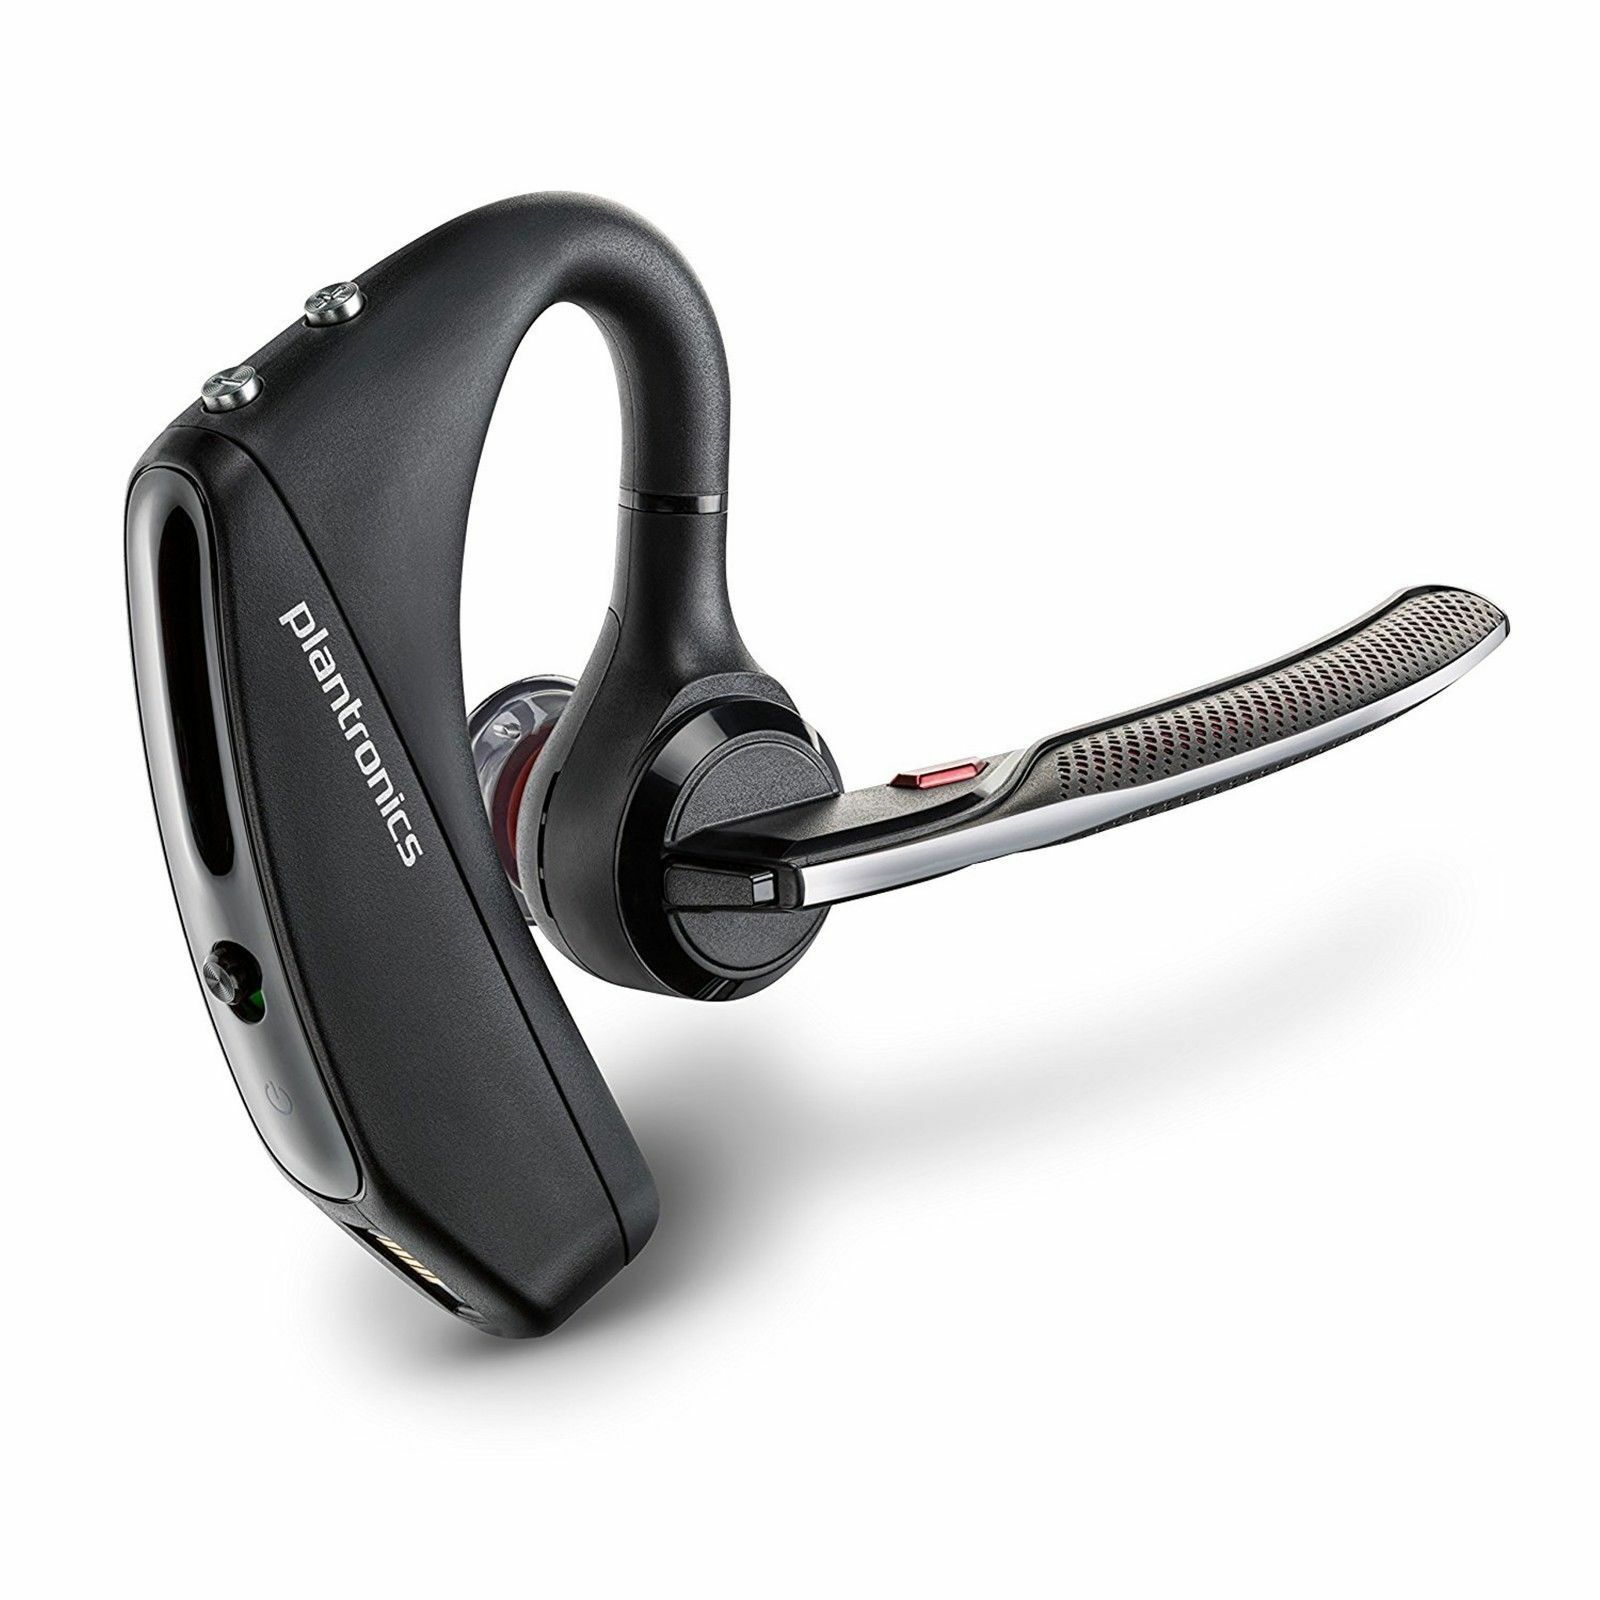 Plantronics Voyager 5200 Premium Hd Bluetooth Headset With Windsmart Technology